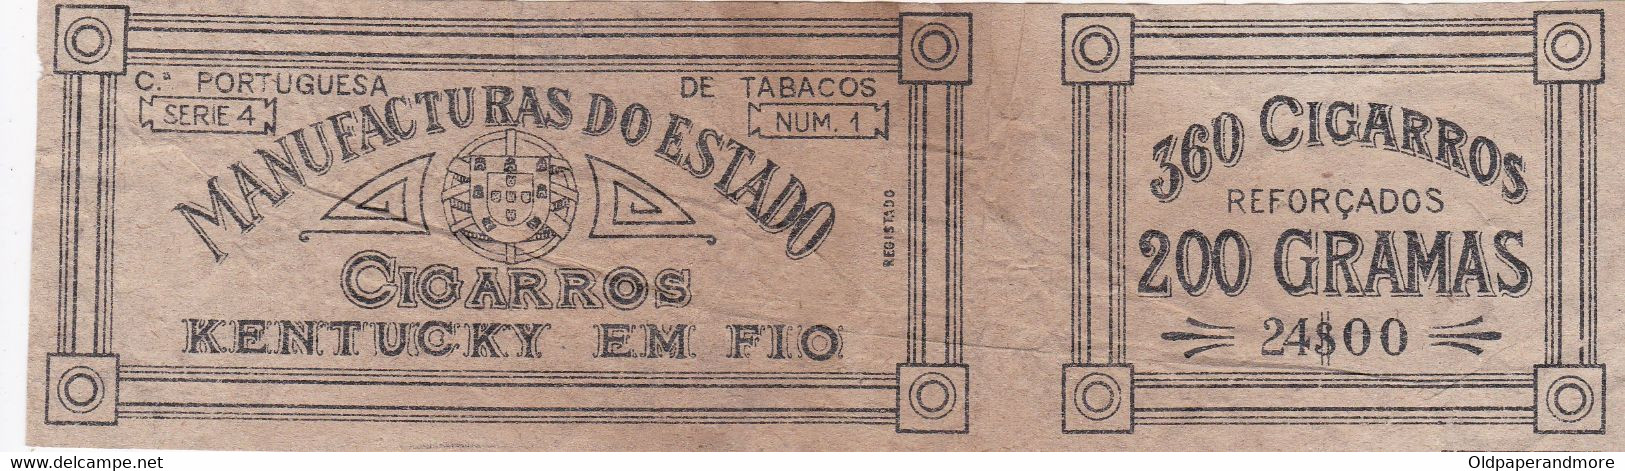 My Box 2 - PORTUGAL - LABEL - CIGARROS KENTUCKY - OLD CIGAR LABEL - TOBACCO LABEL - Etiketten